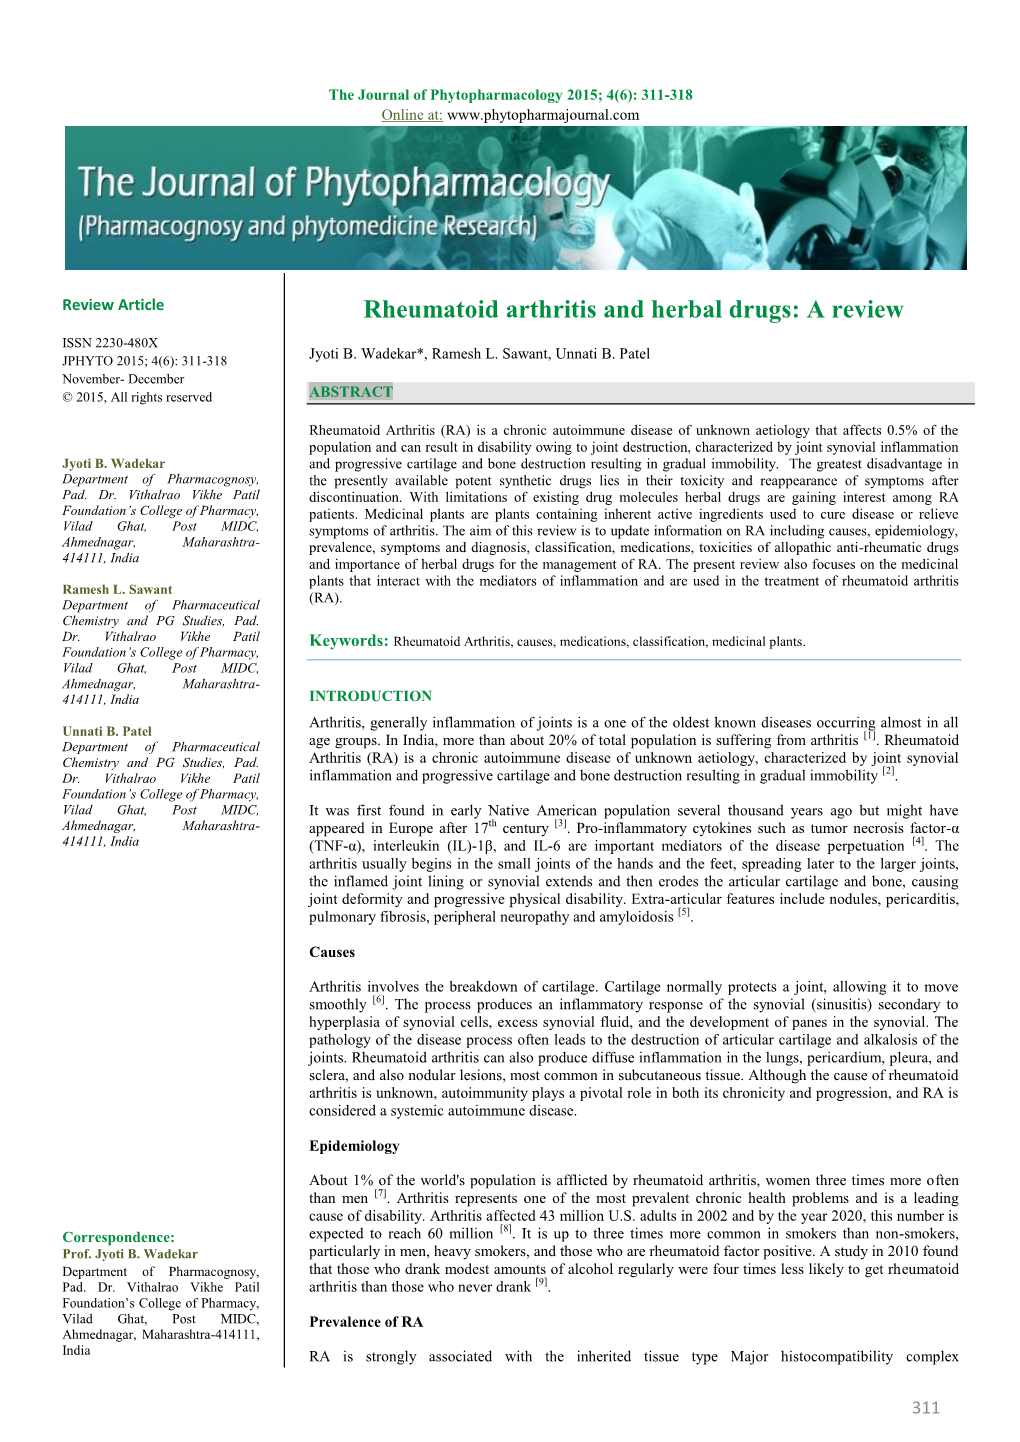 Rheumatoid Arthritis and Herbal Drugs: a Review ISSN 2230-480X JPHYTO 2015; 4(6): 311-318 Jyoti B